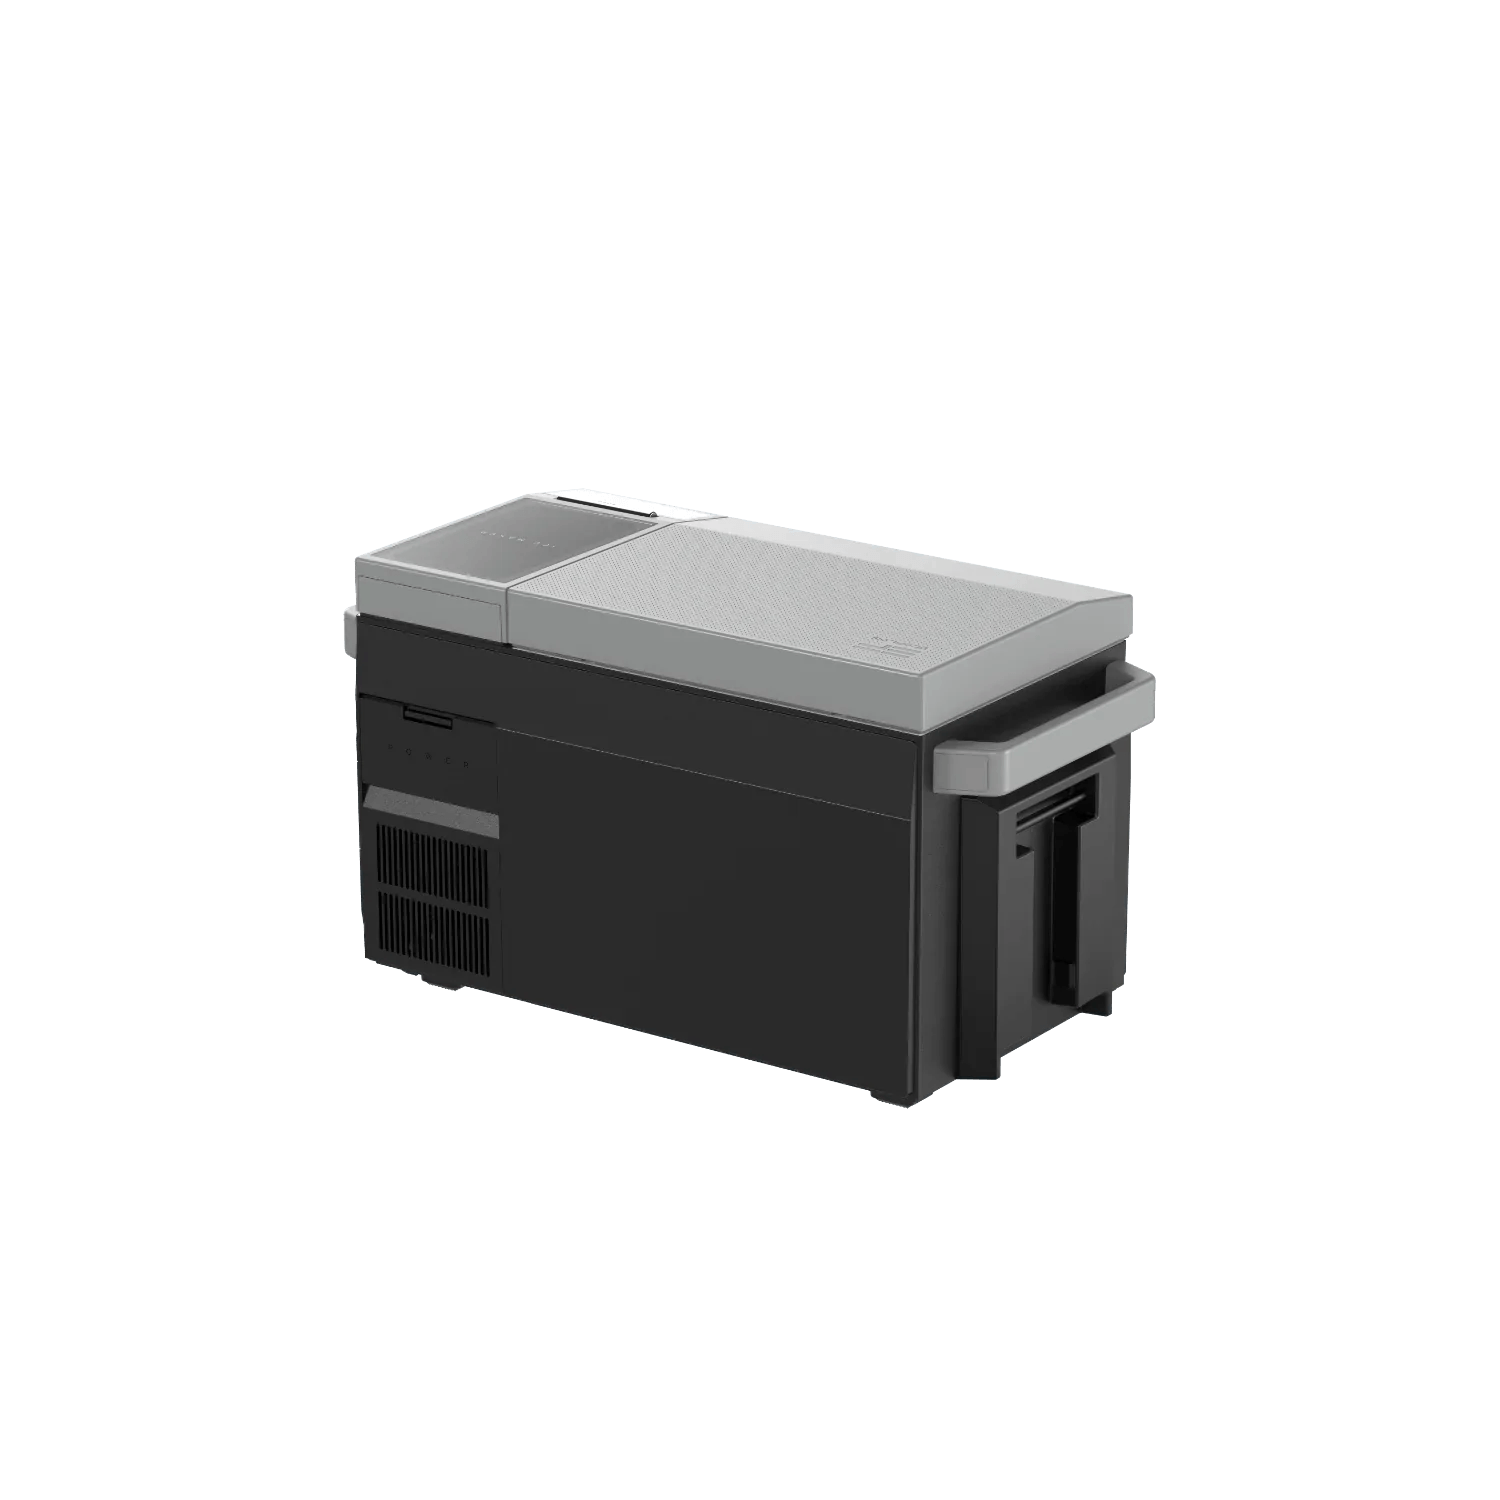 EcoFlow|GLACIER Portable Refrigerator Detachable Wheels and Lever-EcoPowerit